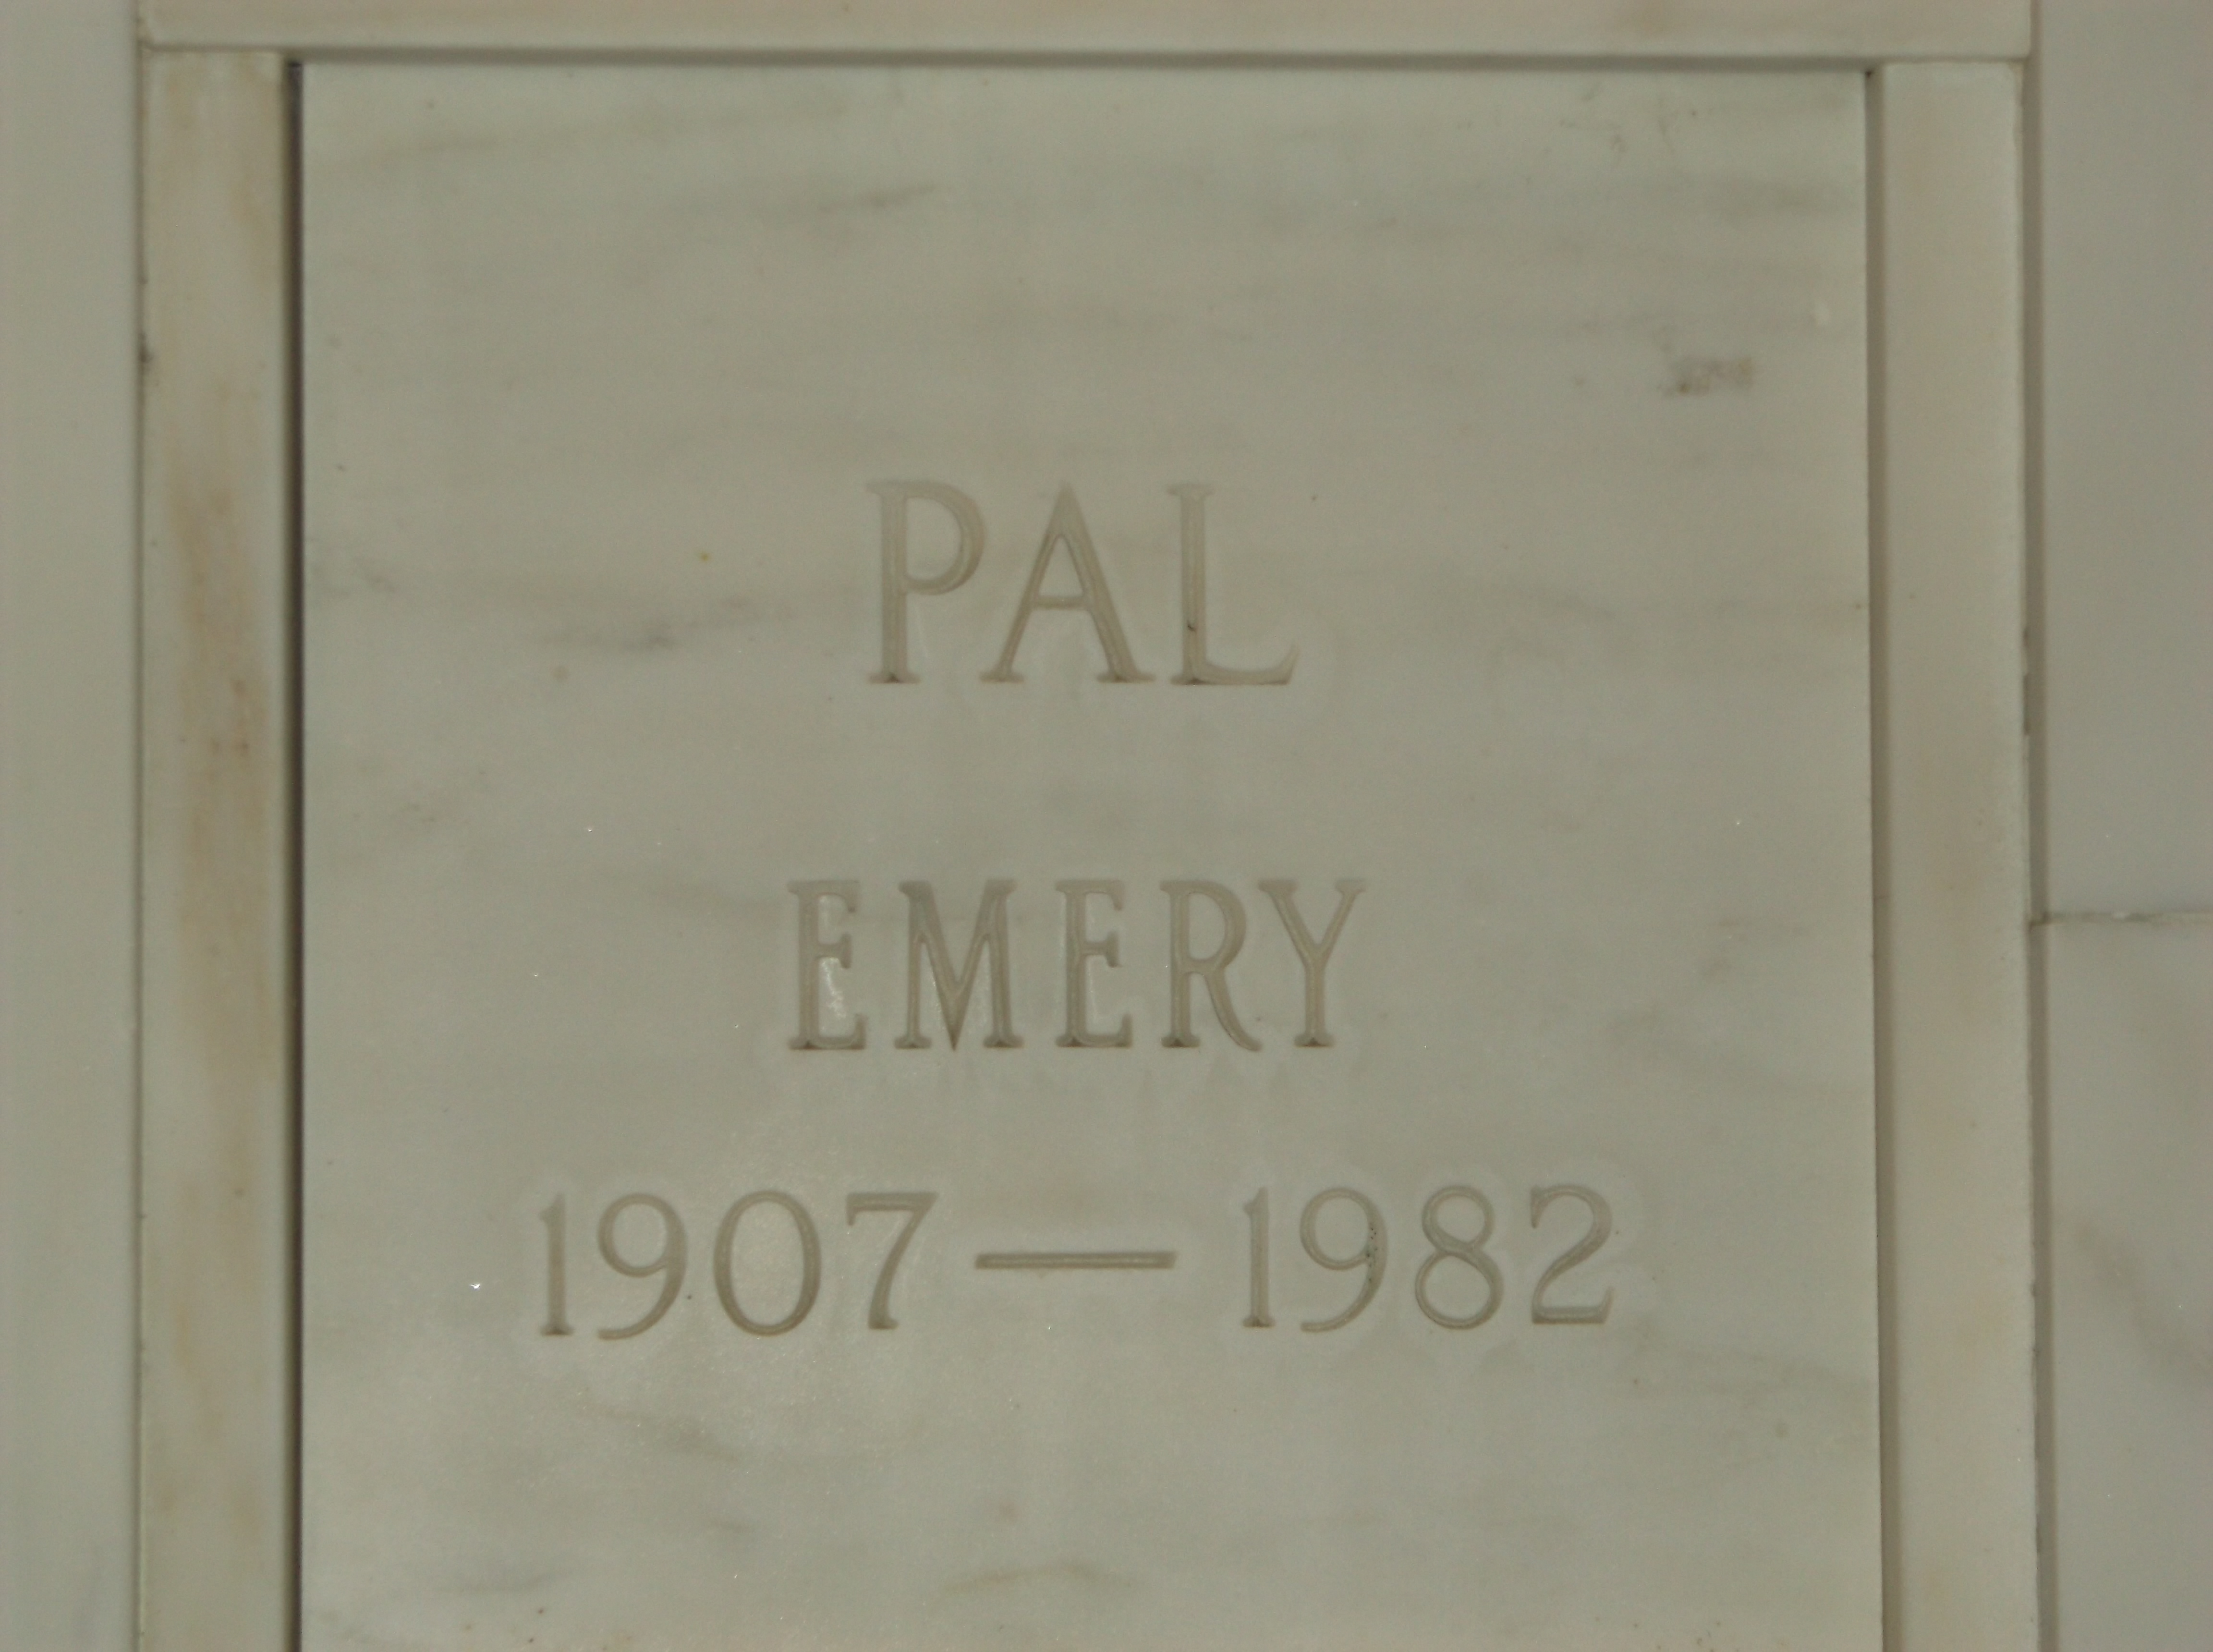 Emery Pal